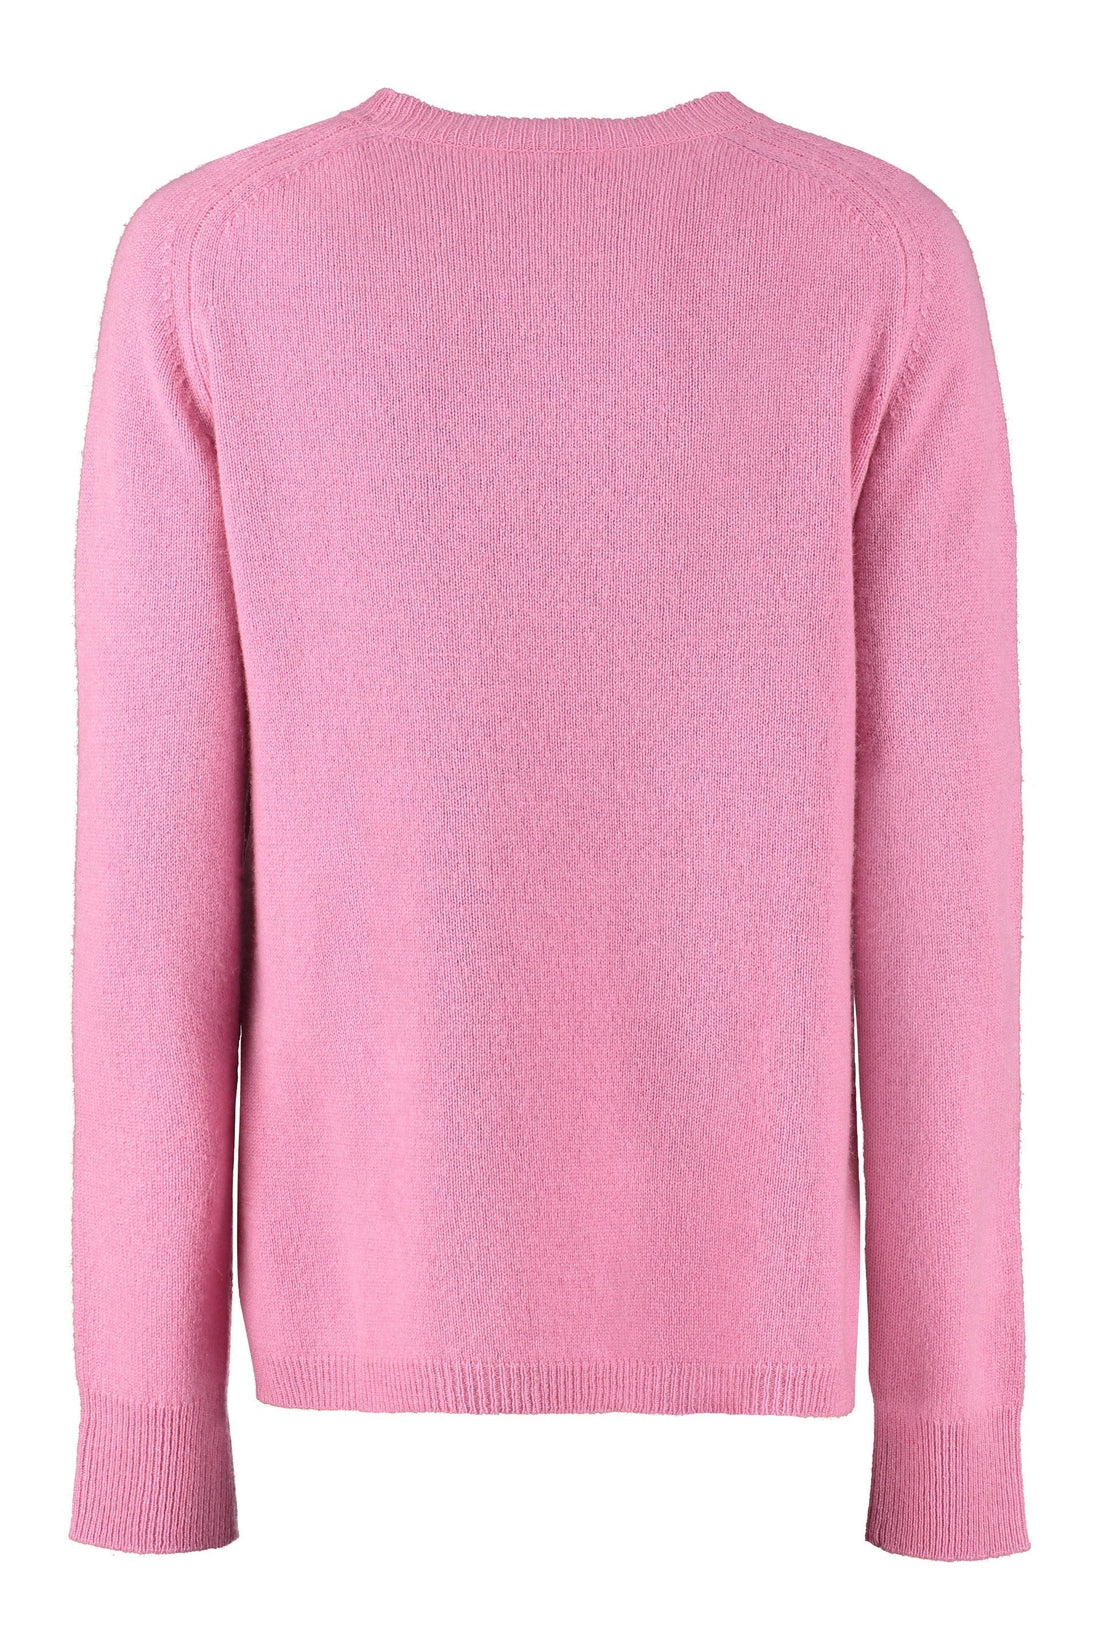 S MAX MARA-OUTLET-SALE-Eclisse cashmere sweater-ARCHIVIST